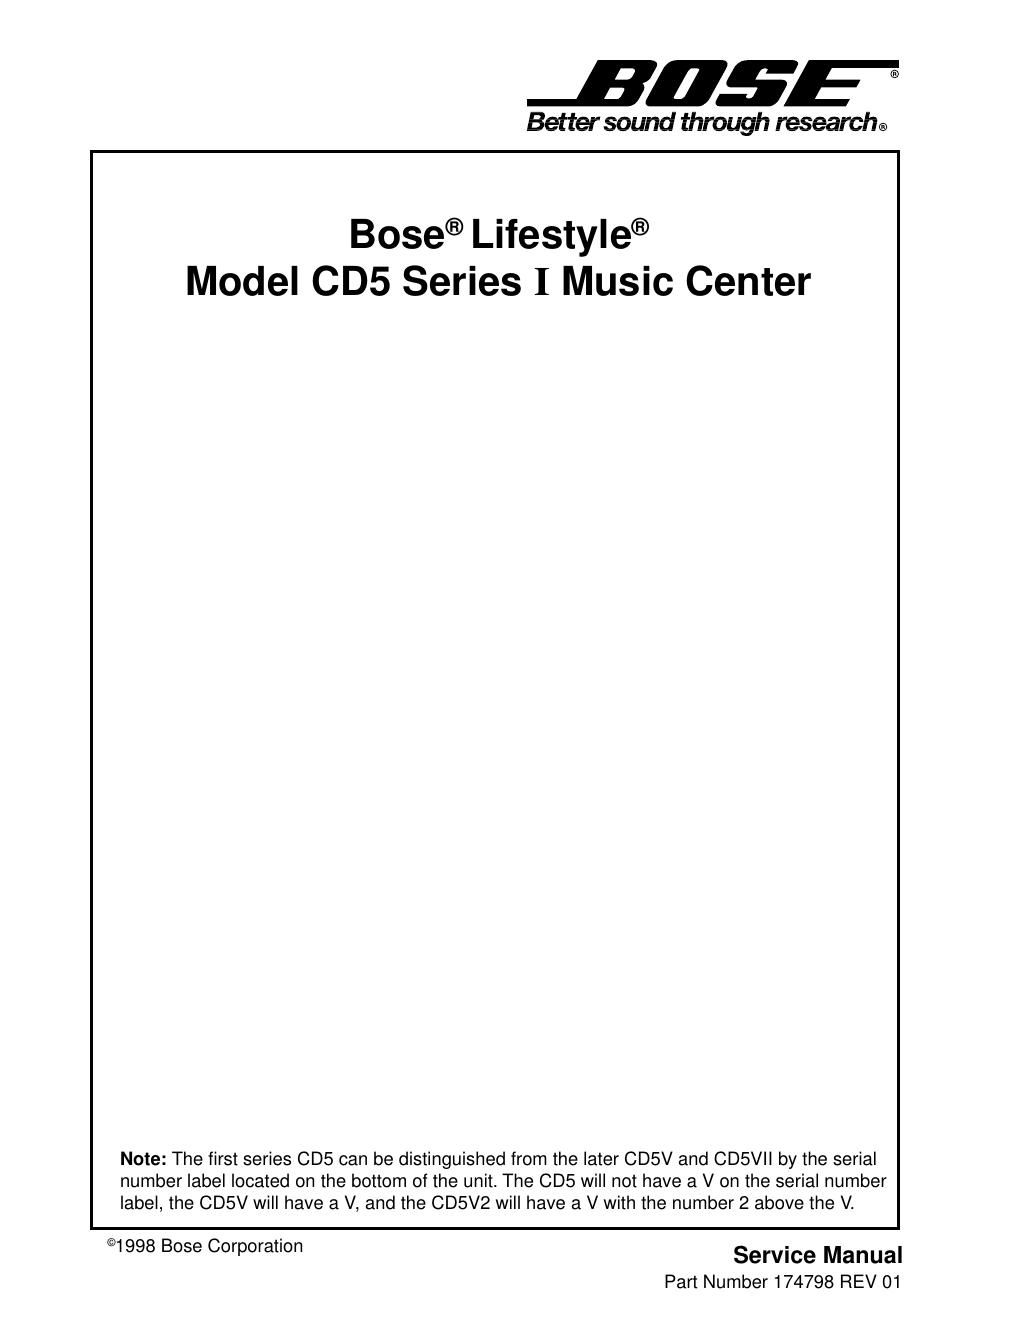 Formuler liner Oprigtighed Free Audio Service Manuals - Free download bose lifestyle cd5 service manual